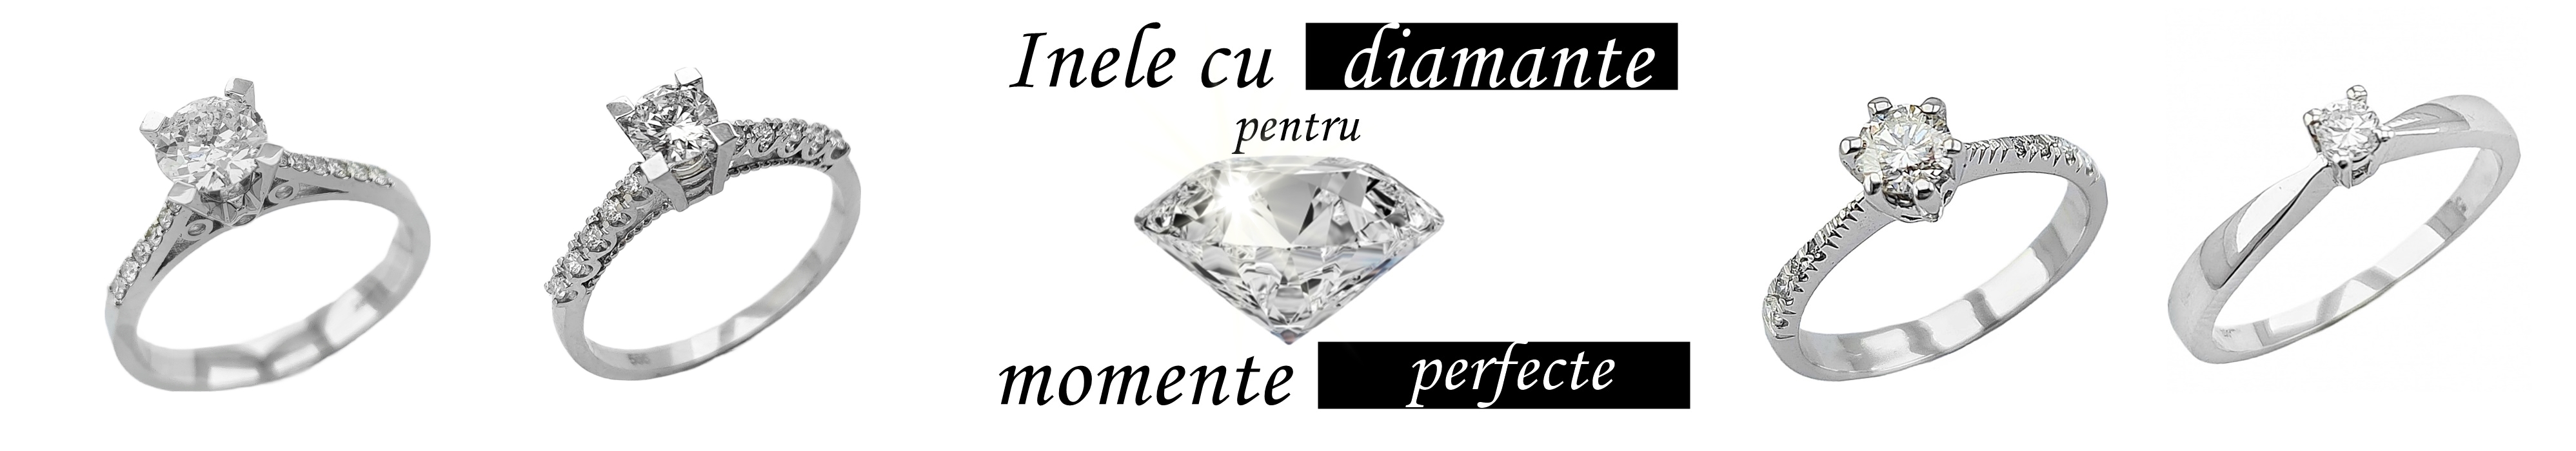 Inele Diamante